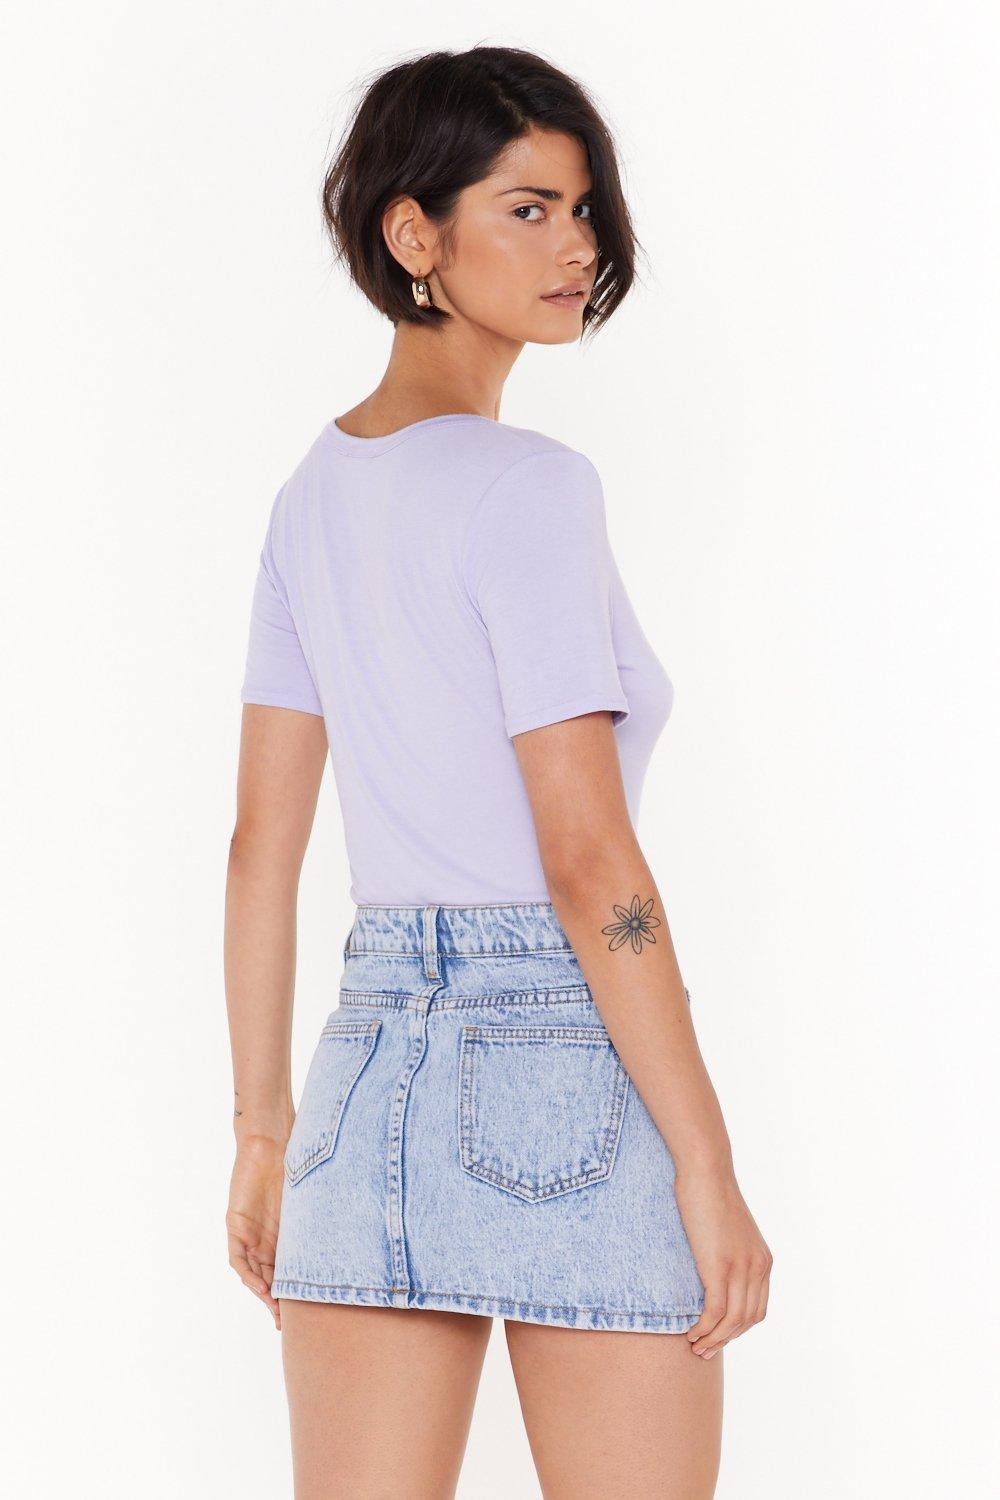 jeans mini skirt